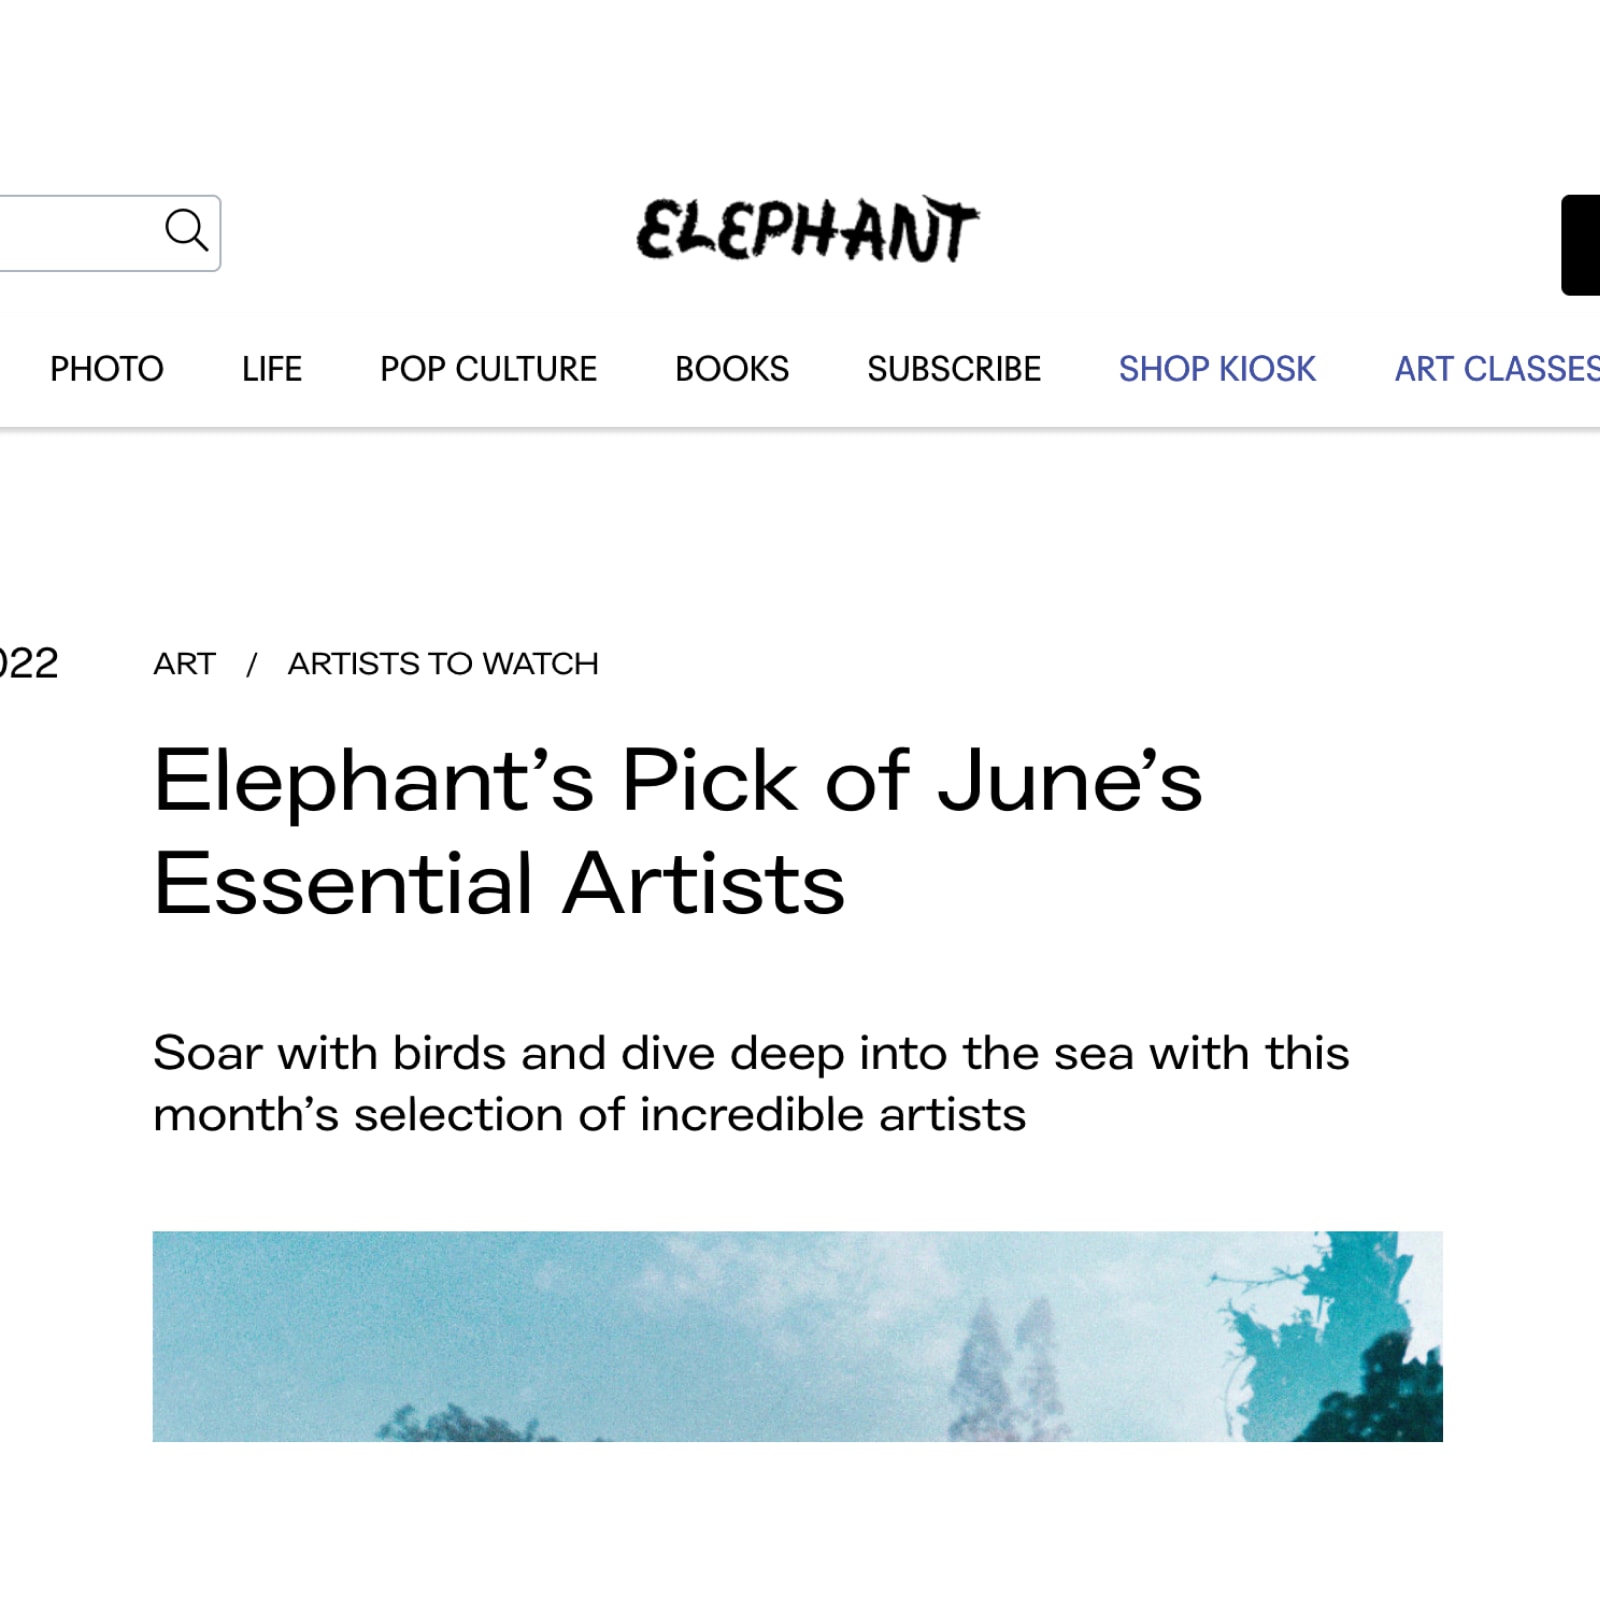 Elephant Magazine Elephant’s Pick of June’s Essential Artists 10 June 2022